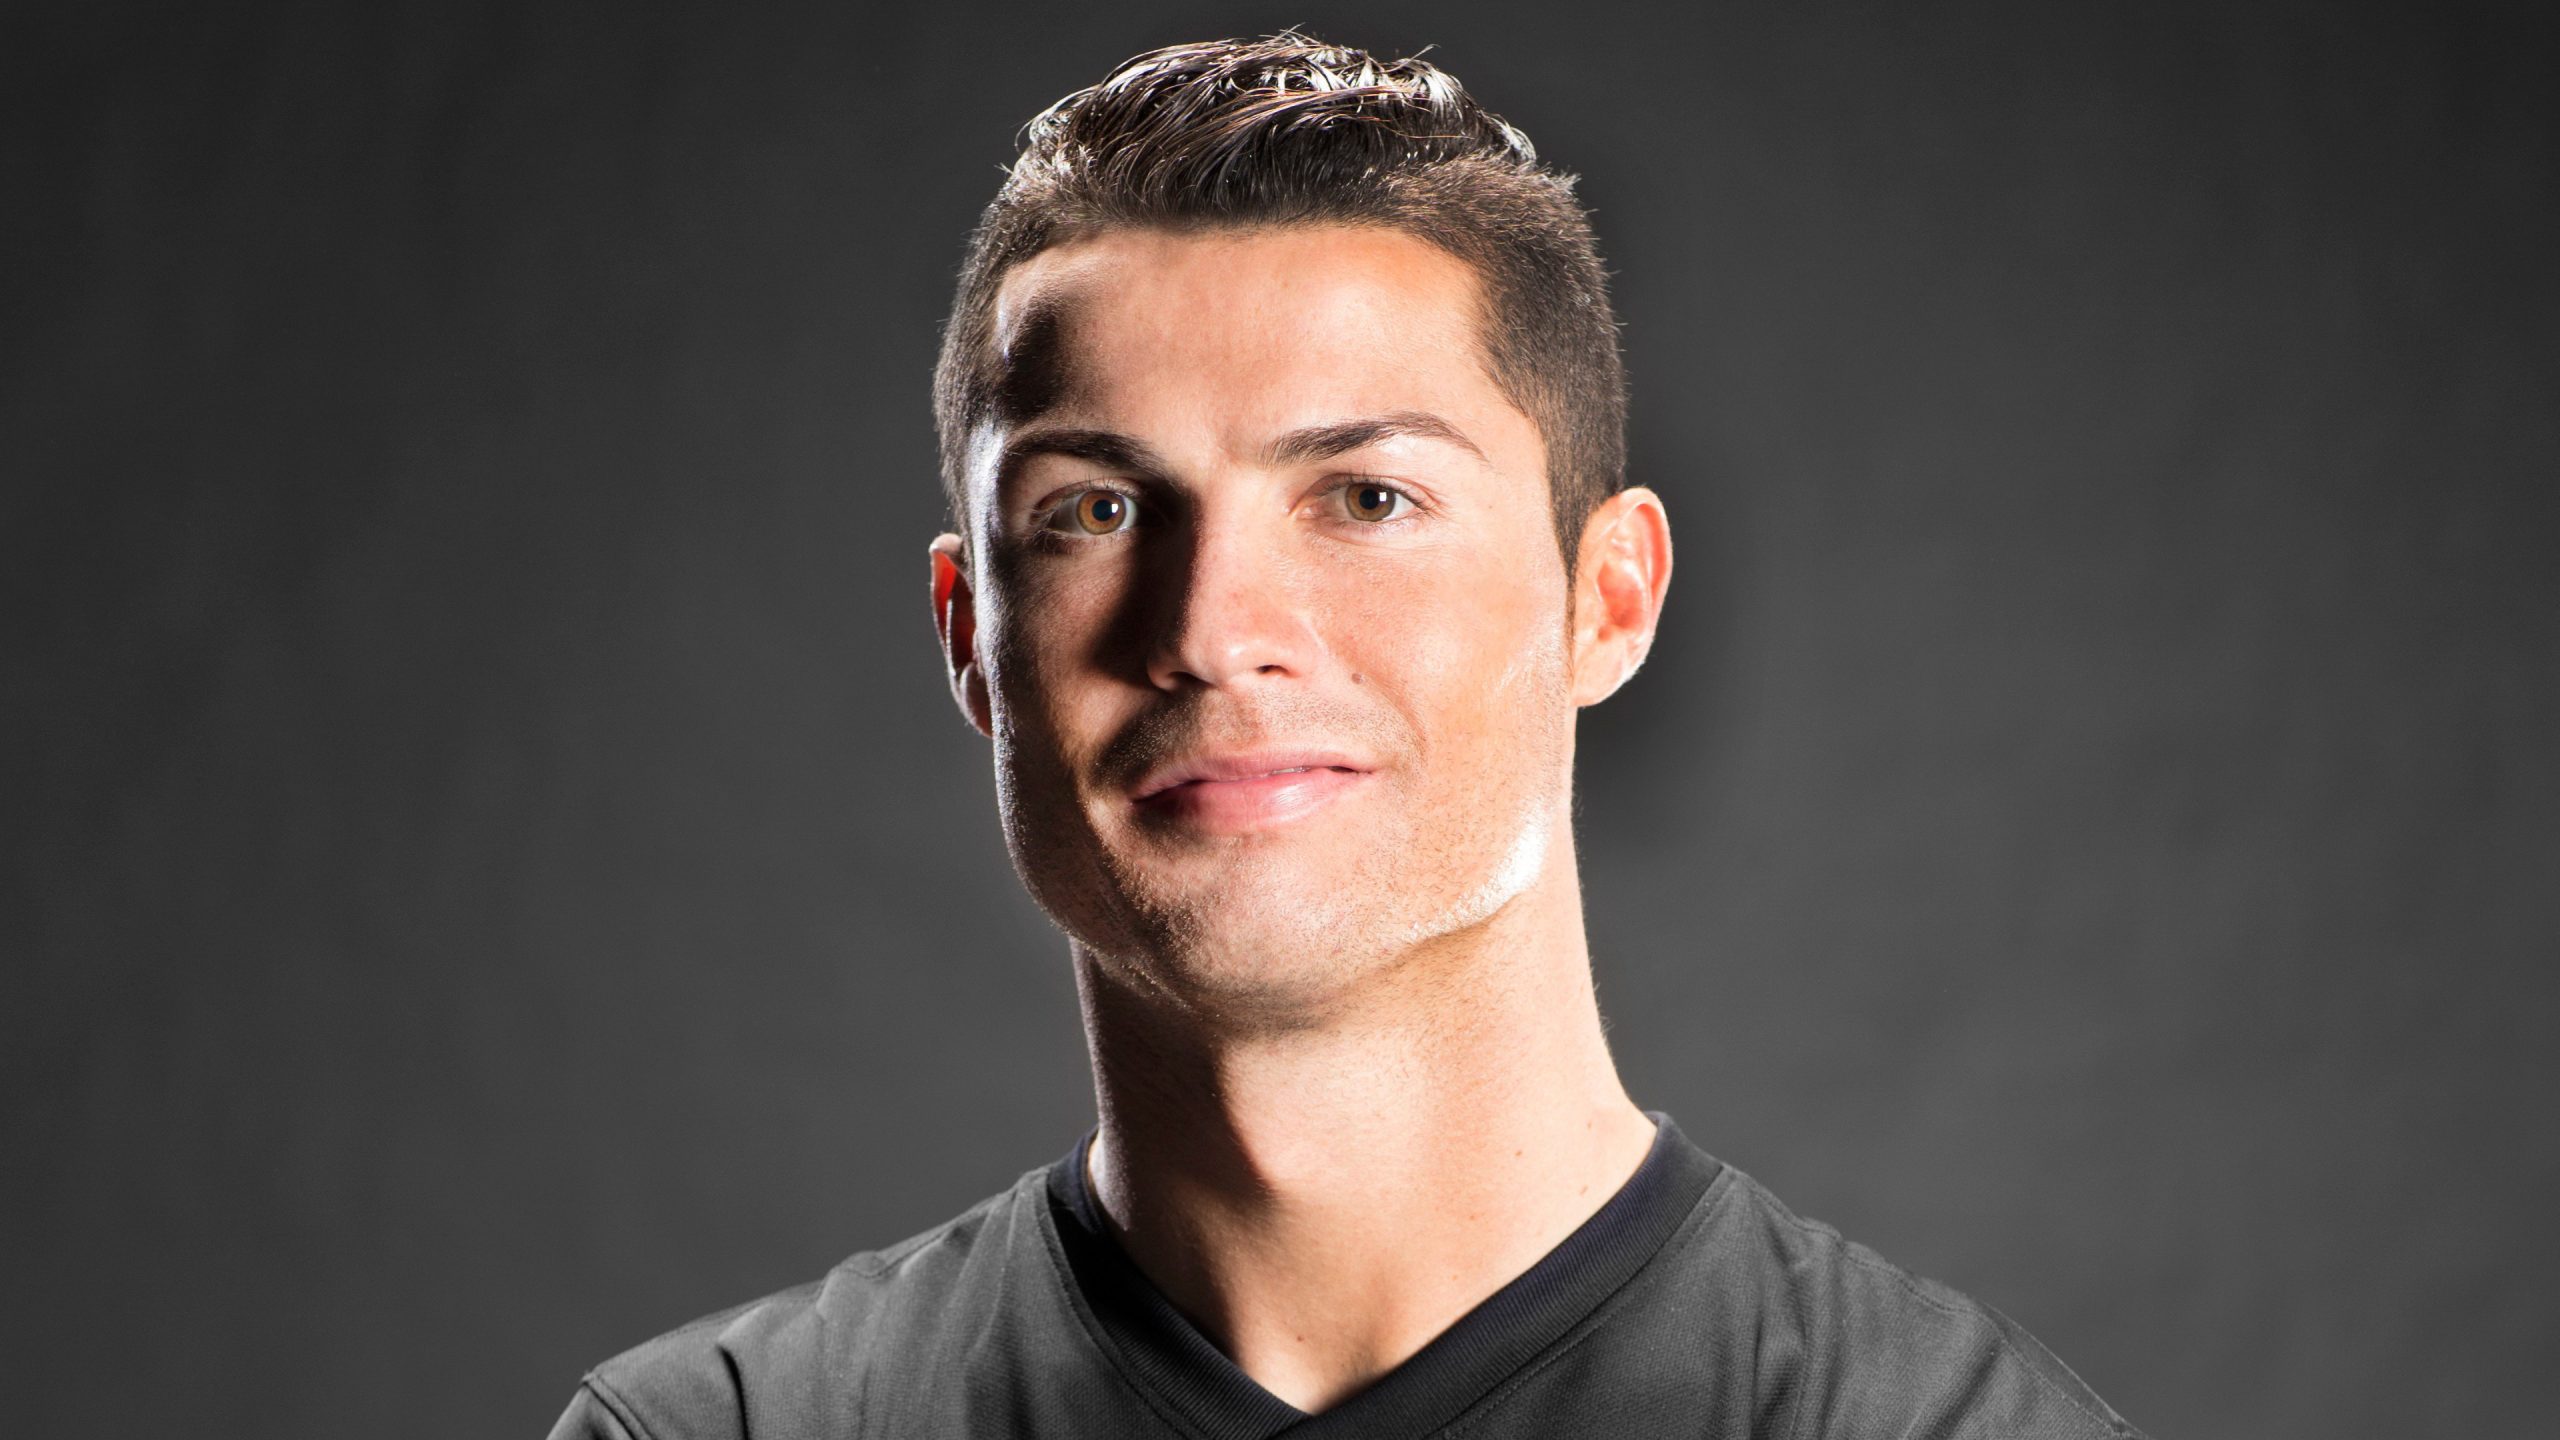 Hình nền Ronaldo 4k